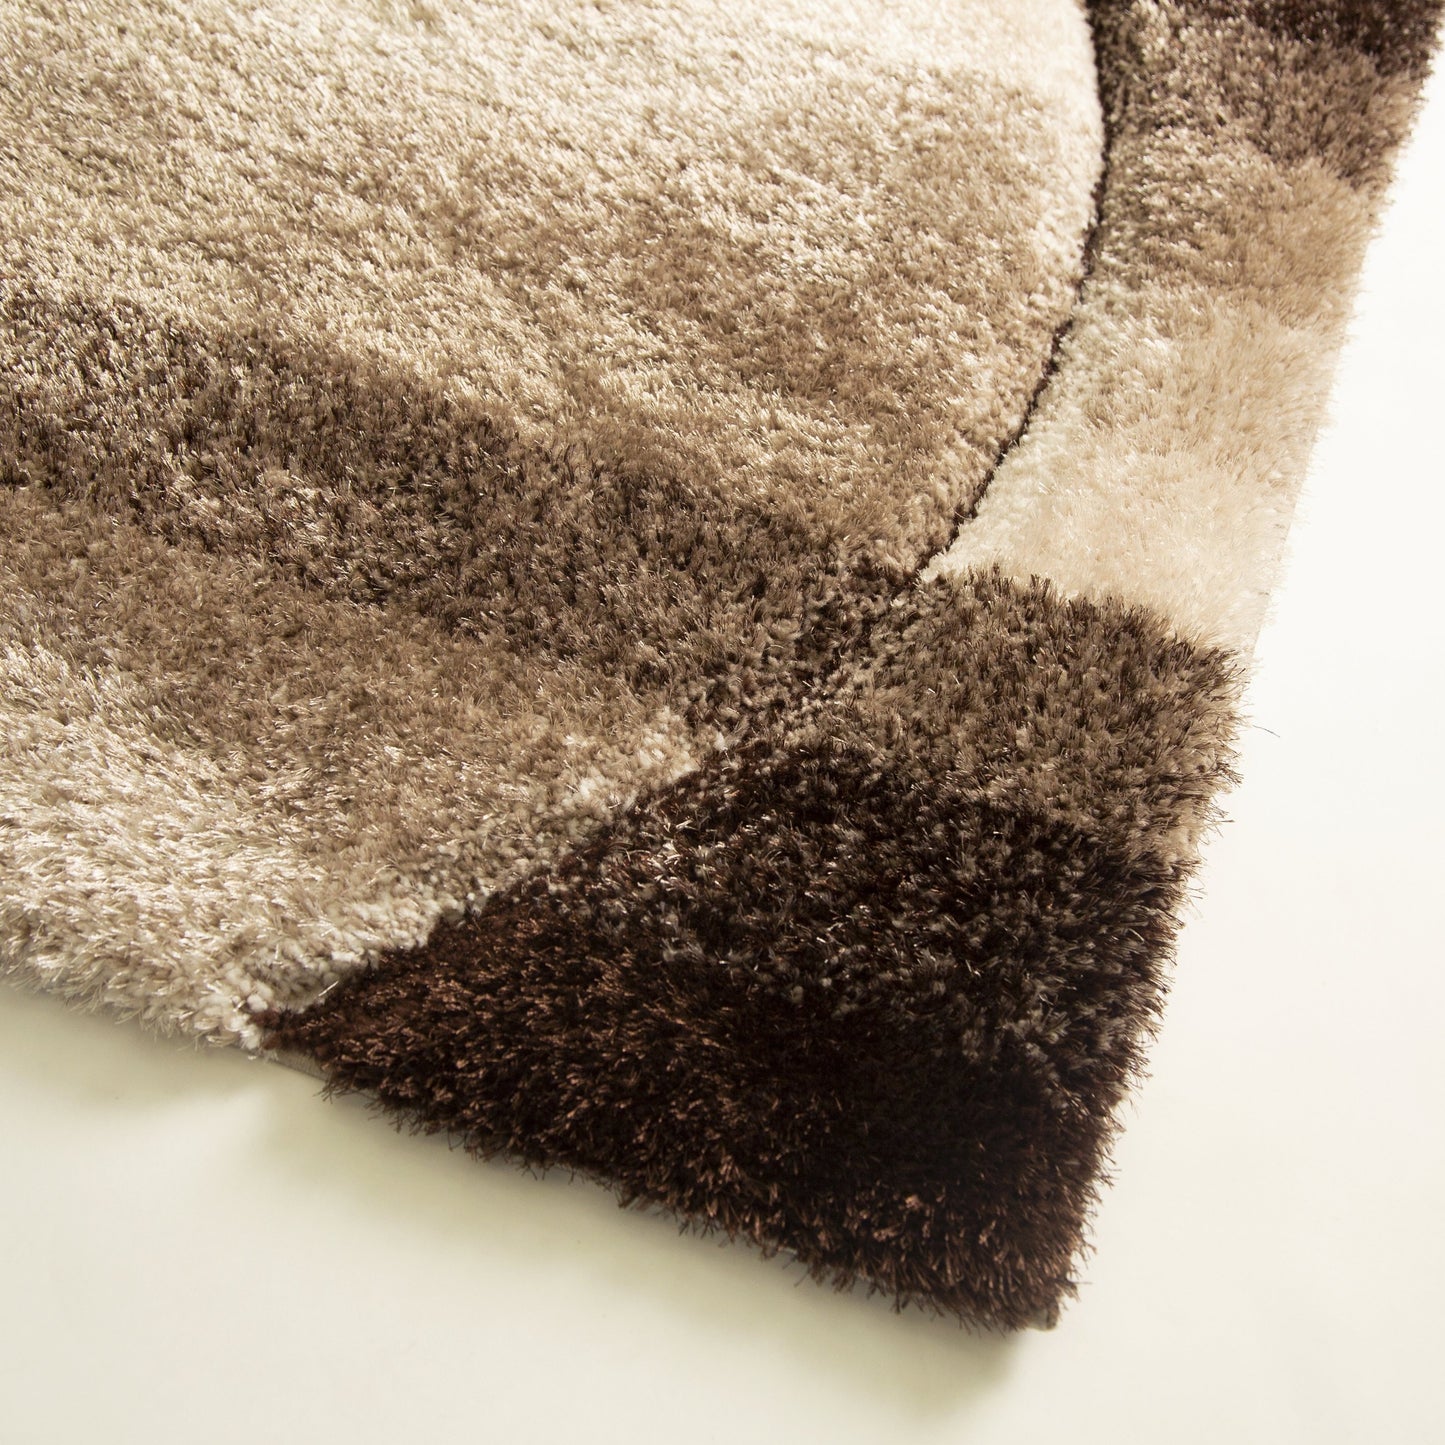 Plush Fluffy Shine 3D Earth Tone/Brown/Beige Shag Area Rug/Carpet